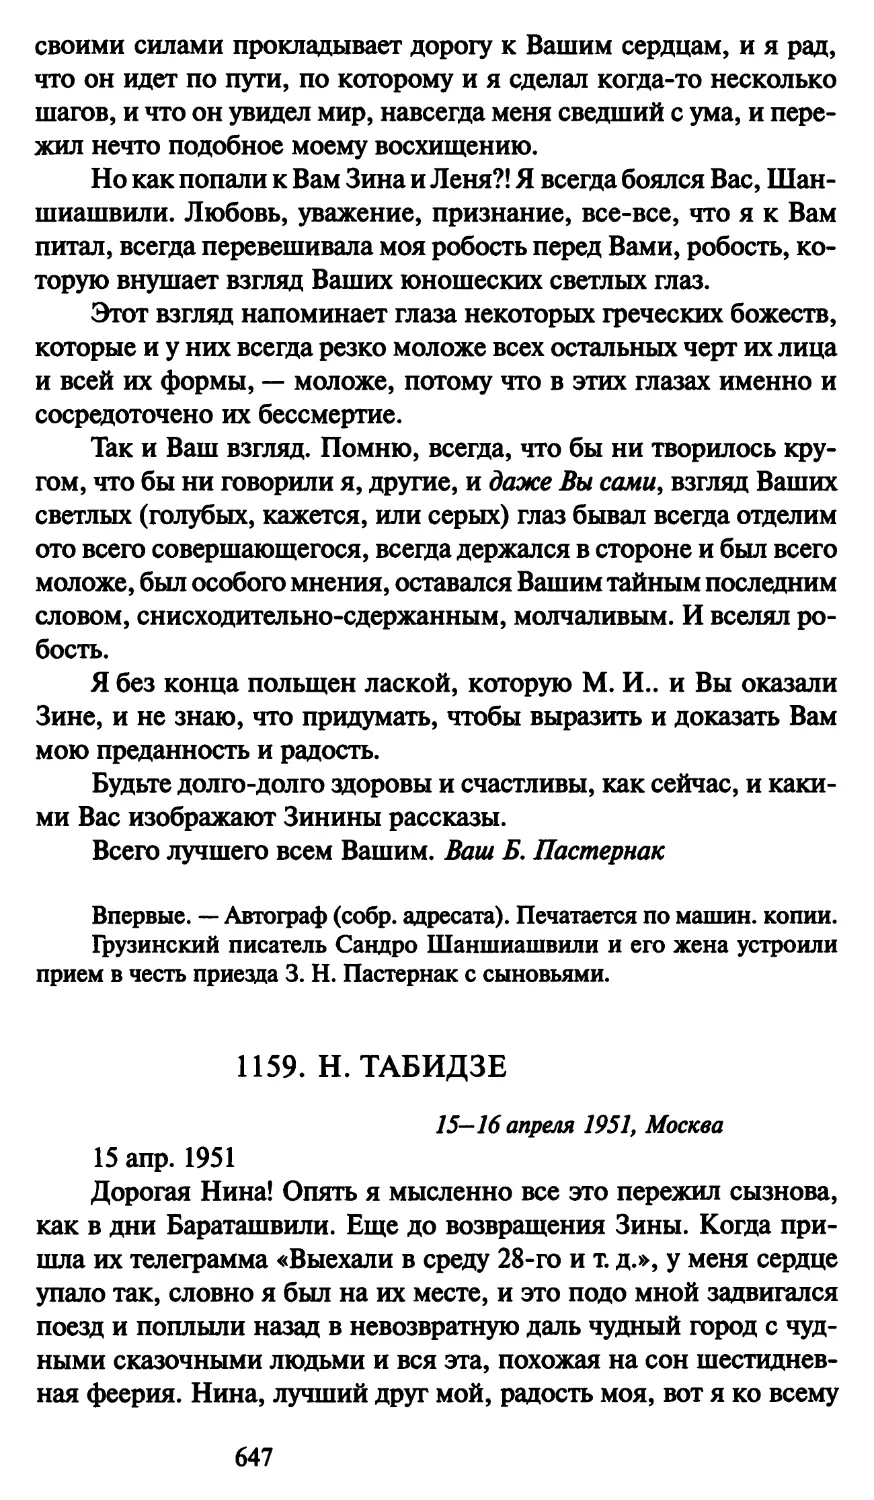 1159. Н. Табидзе 15-16 апреля 1951